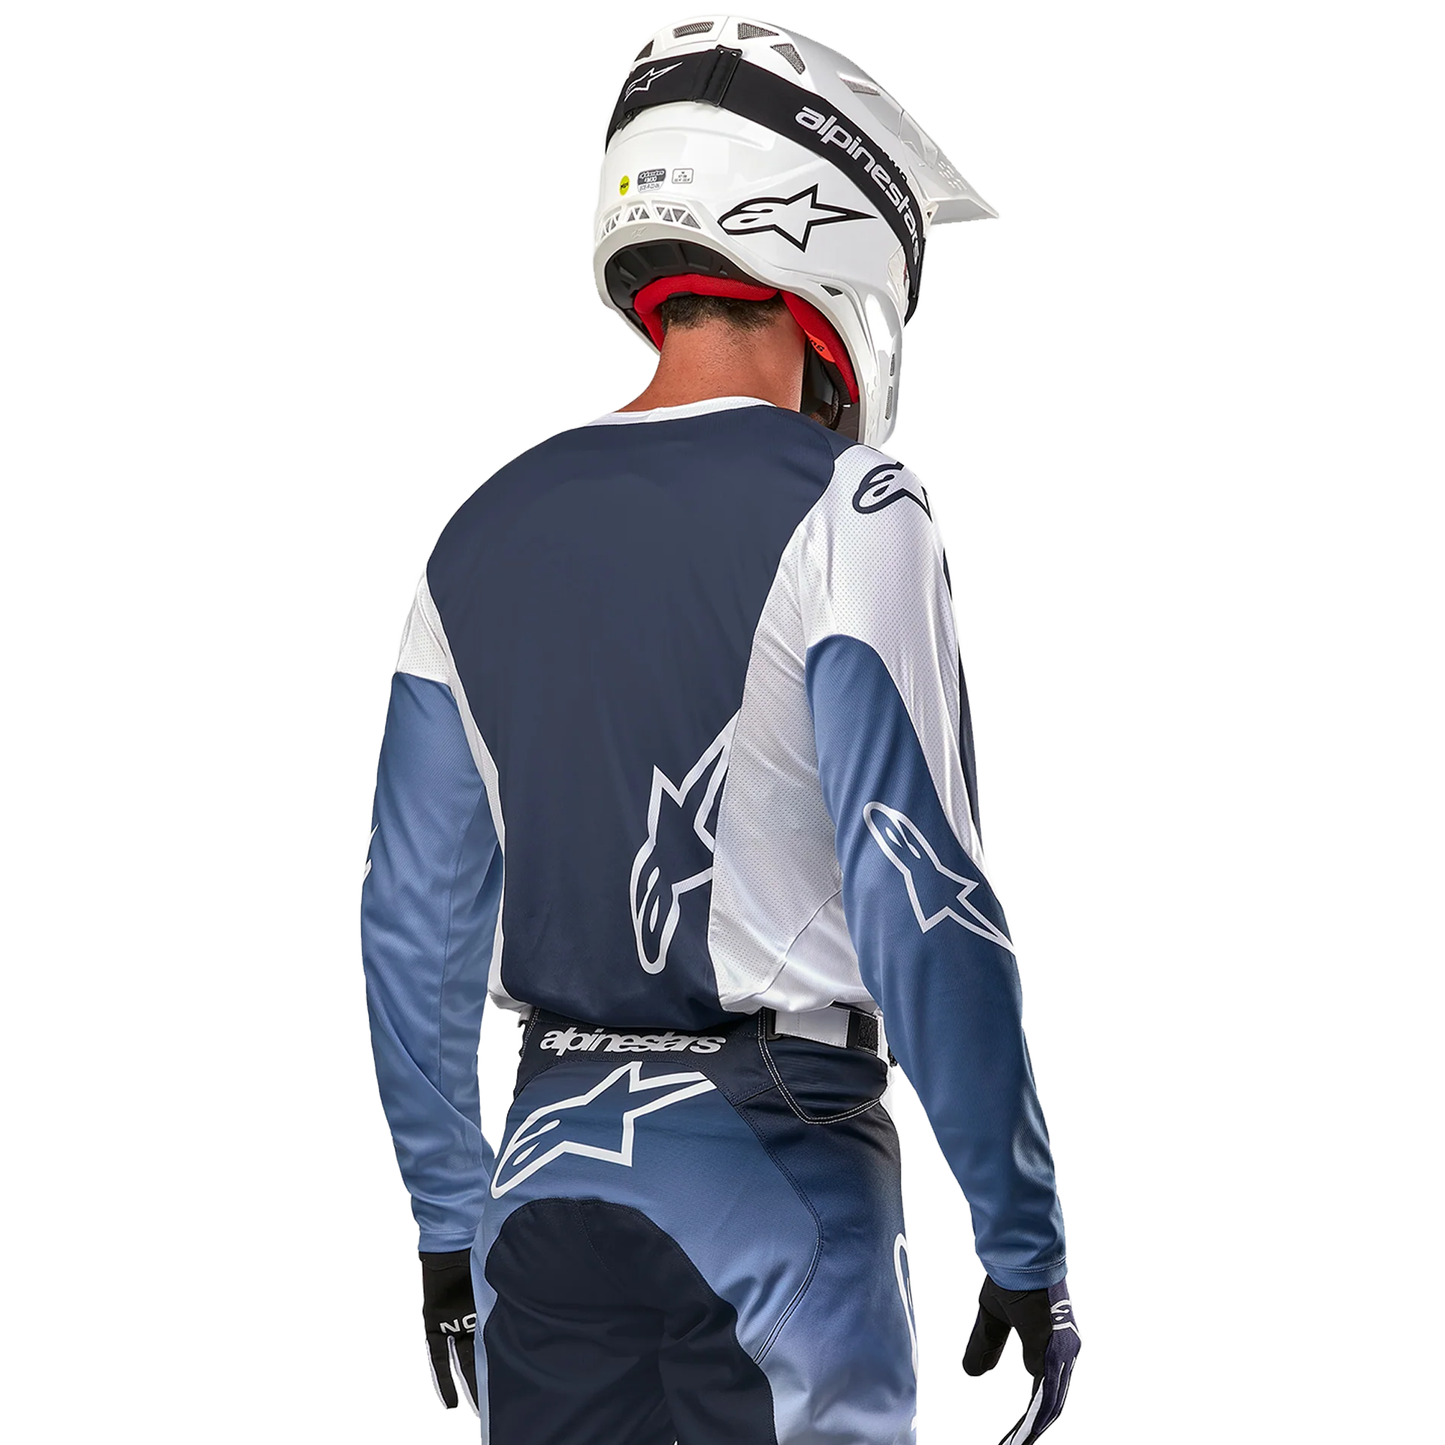 Alpinestars Racer Hoen Jersey - White/Dark Navy/Light Blue (2070)